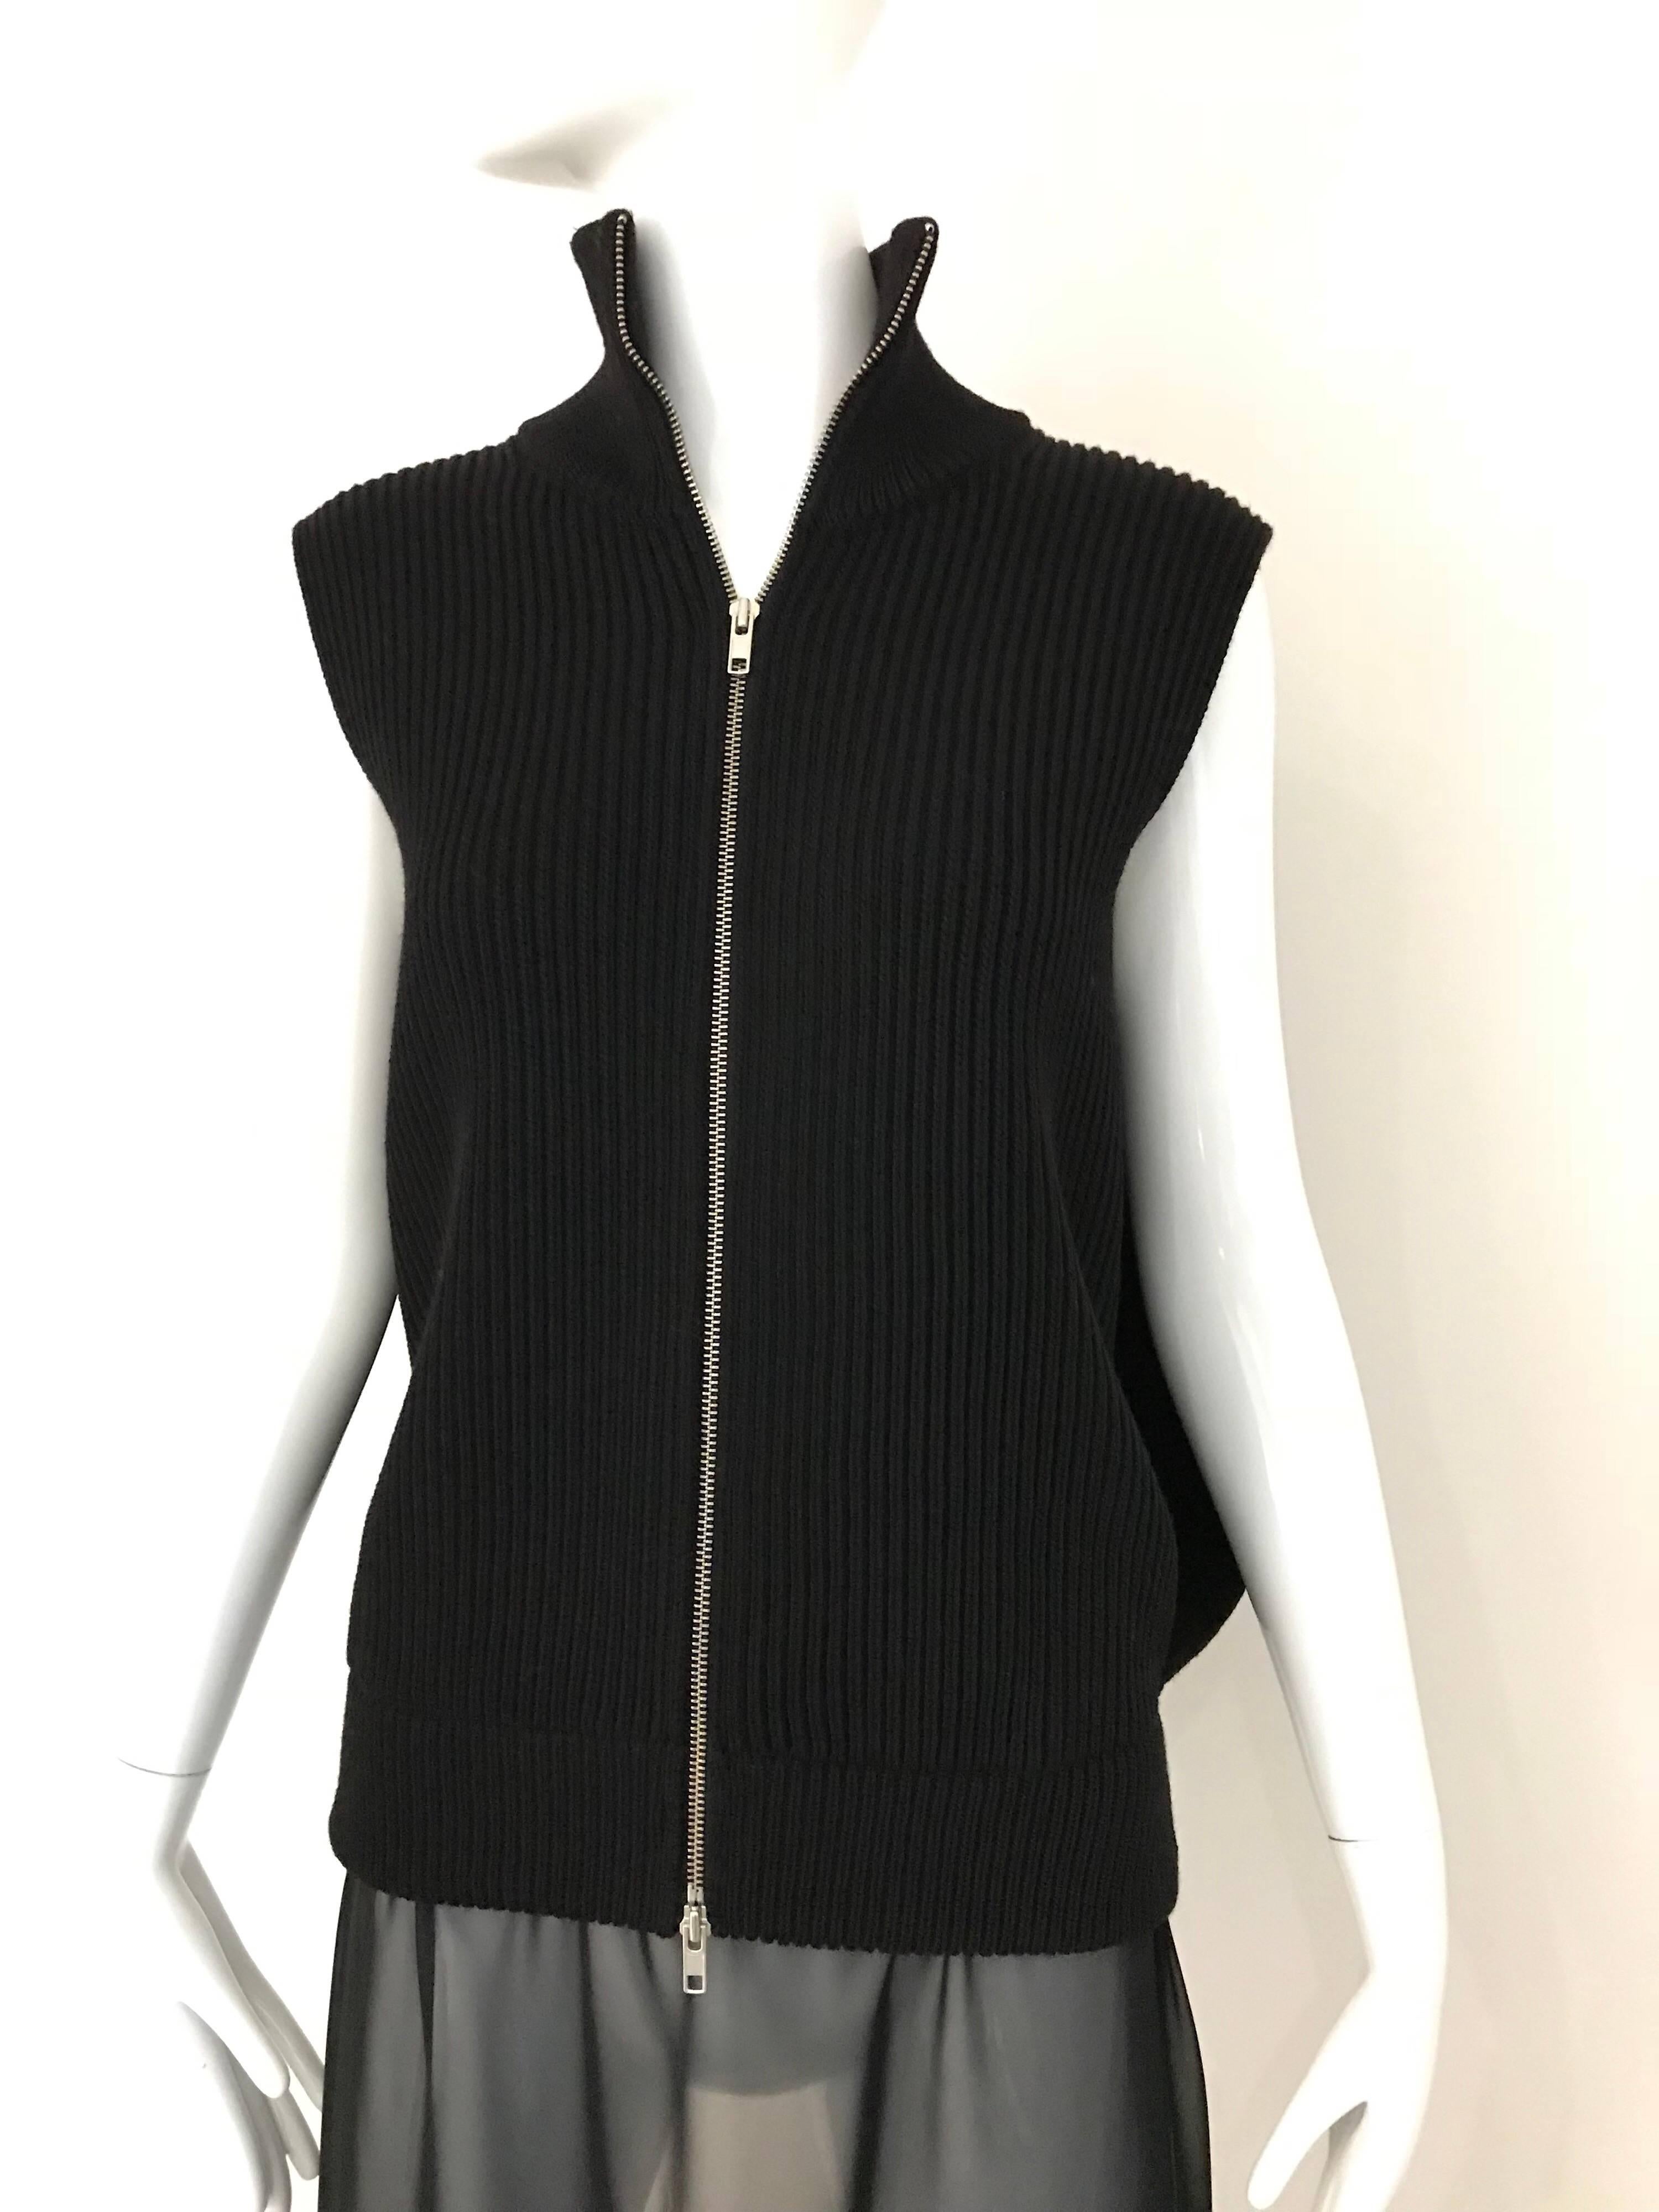 Martin Margiela Sleeveless black wool maxi cardigan top with sheer silk.
Fit size 4/6
